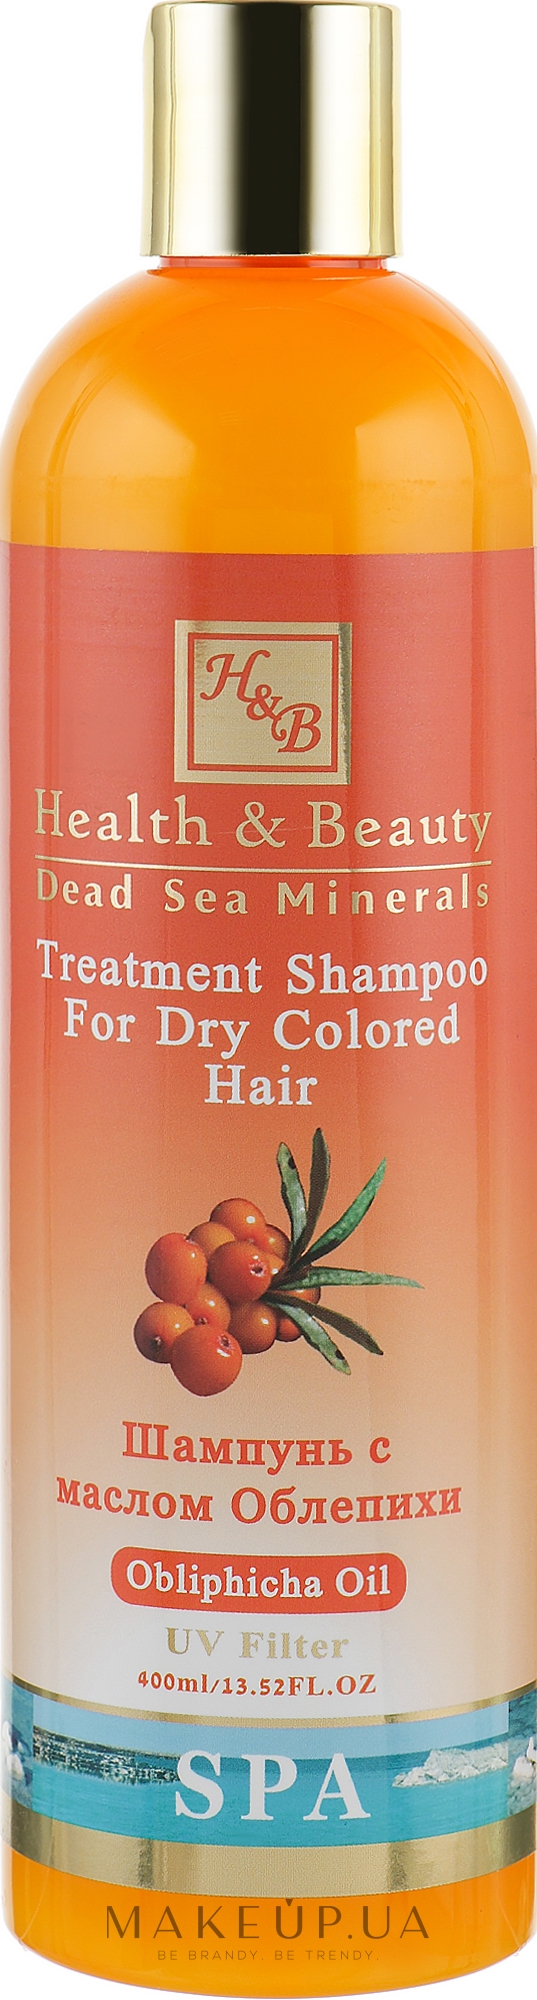 Шампунь для сухих окрашенных волос с маслом облепихи - Health And Beauty Obliphicha Treatment Shampoo for Dry Colored Hair — фото 400ml